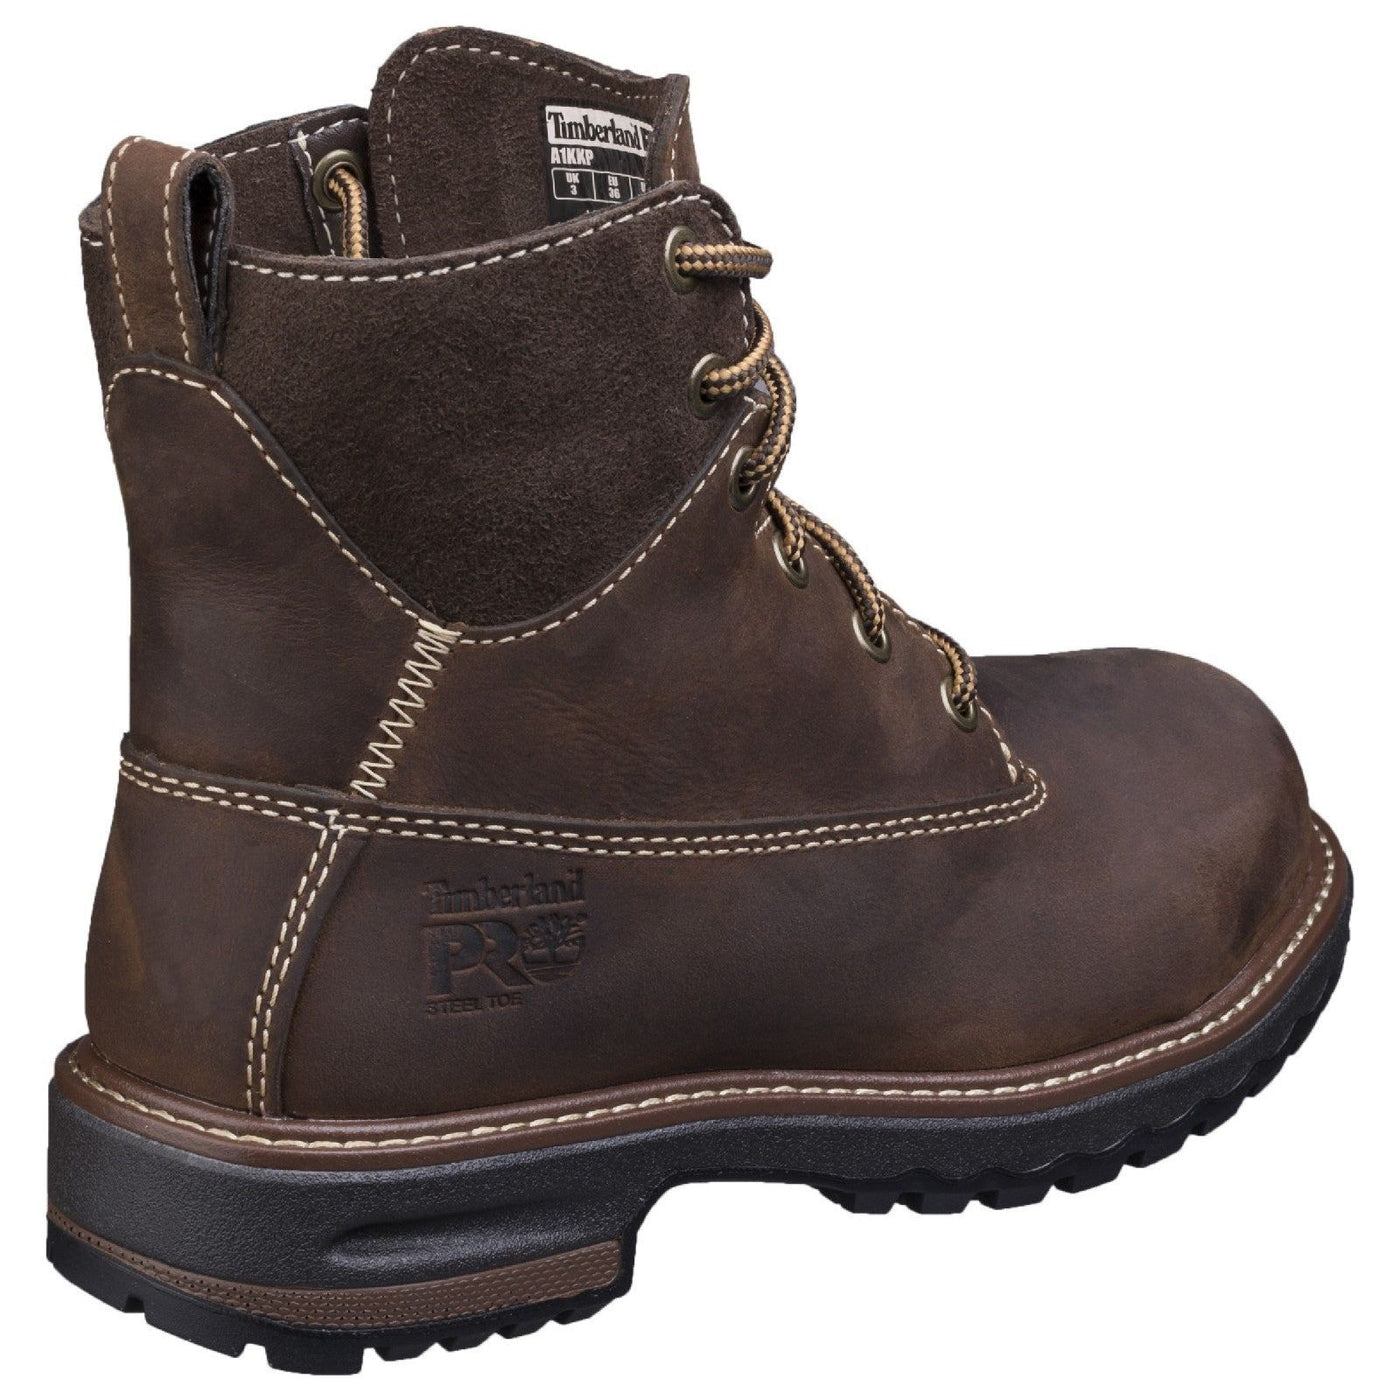 Timberland Hightower Safety Boots - Womens